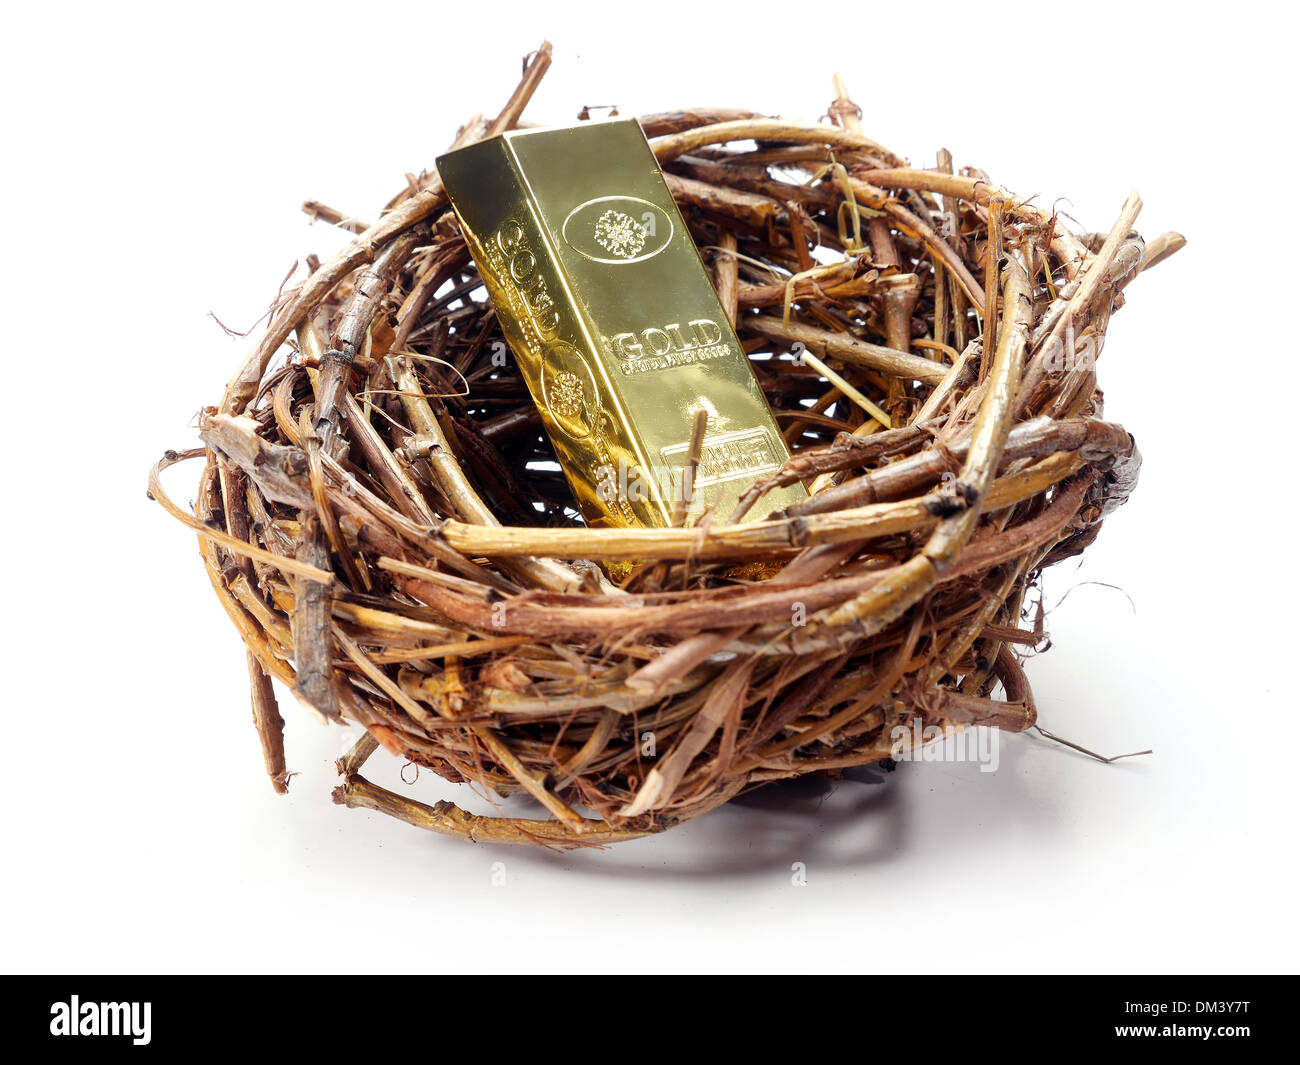 Gold bar in bird's nest over white background Stock Photo